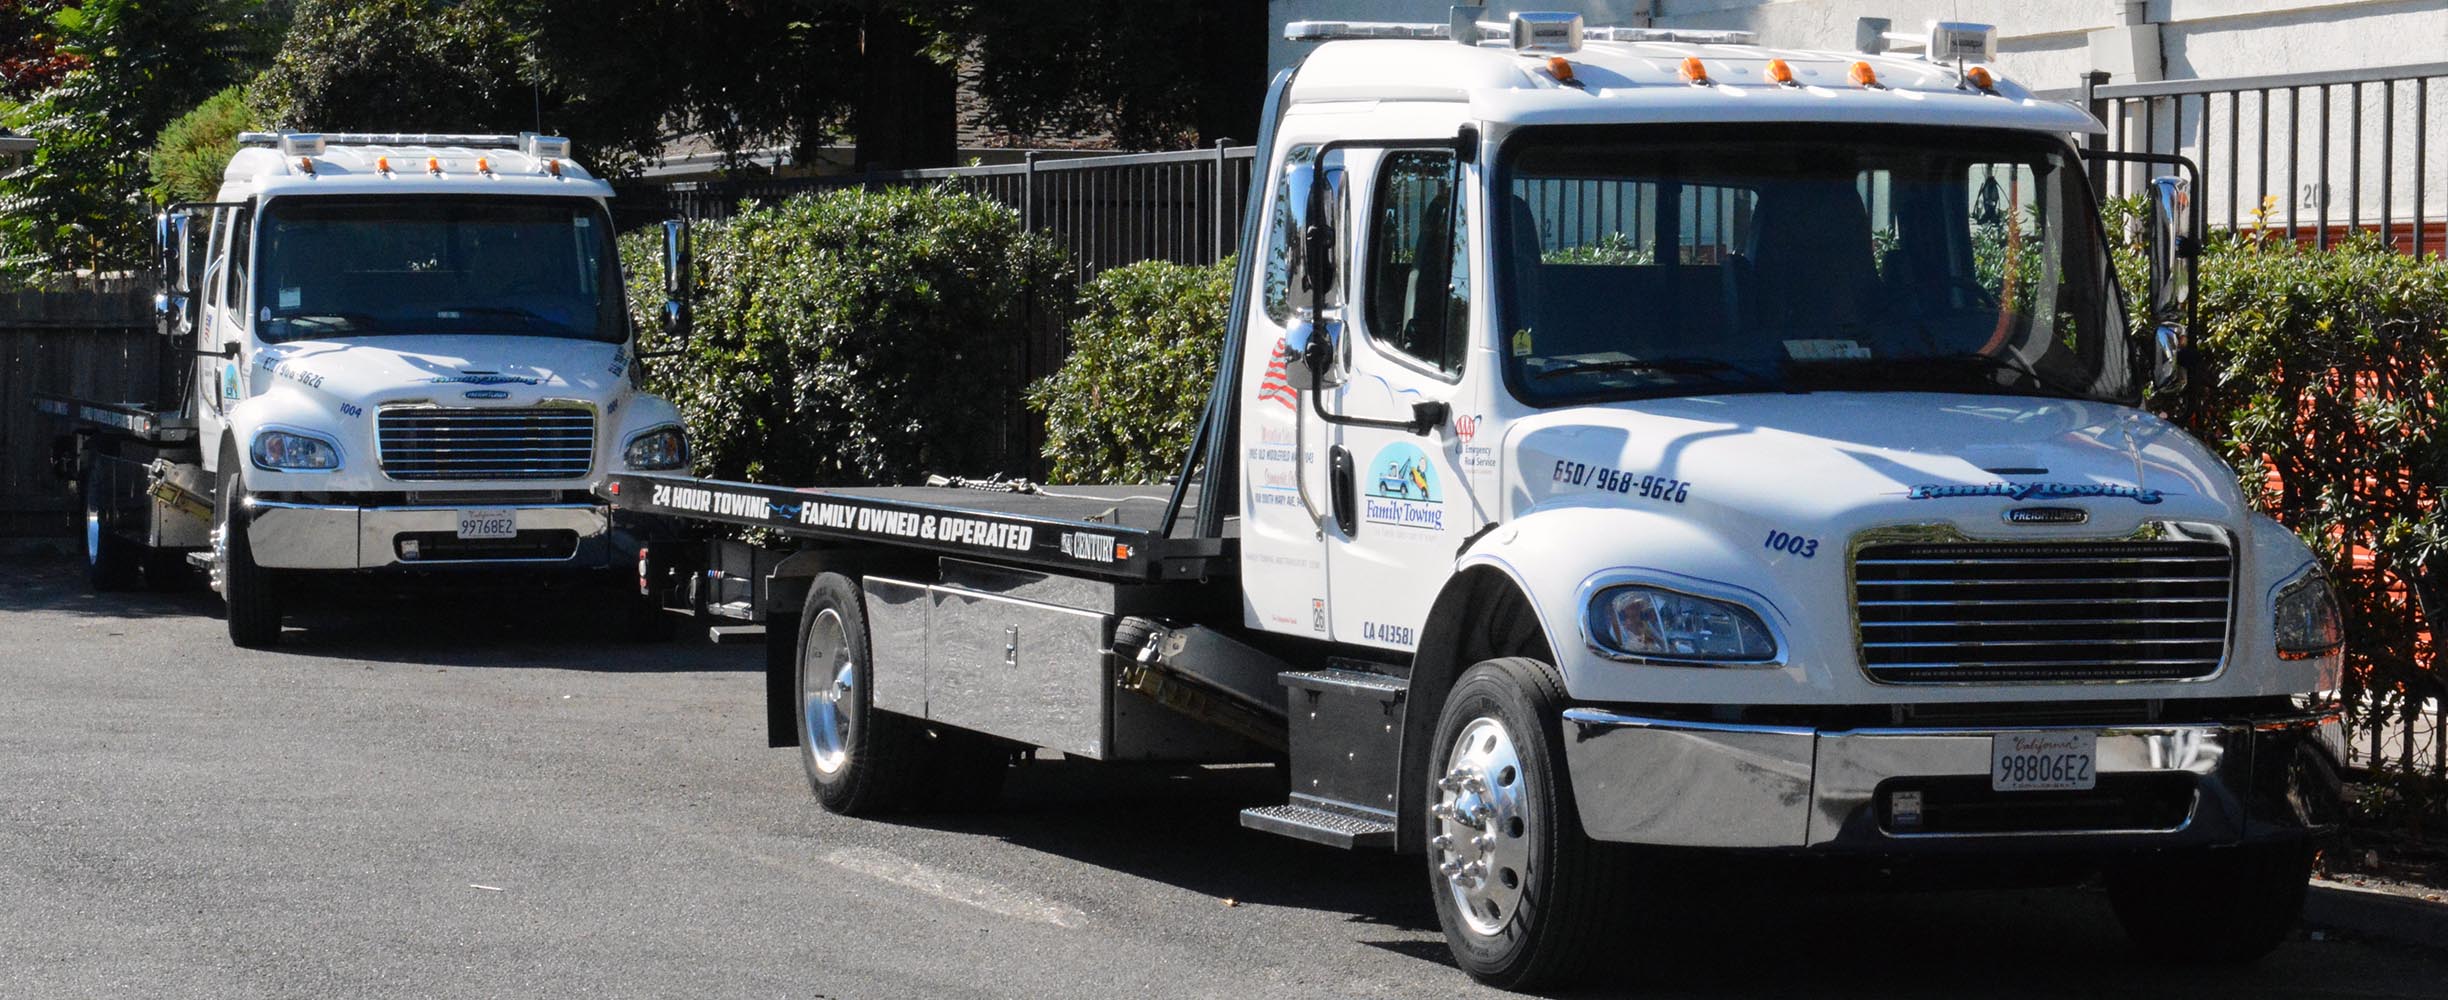 New towing truck fleet in Mountain viewe servicing the San Francisco Peninsula.